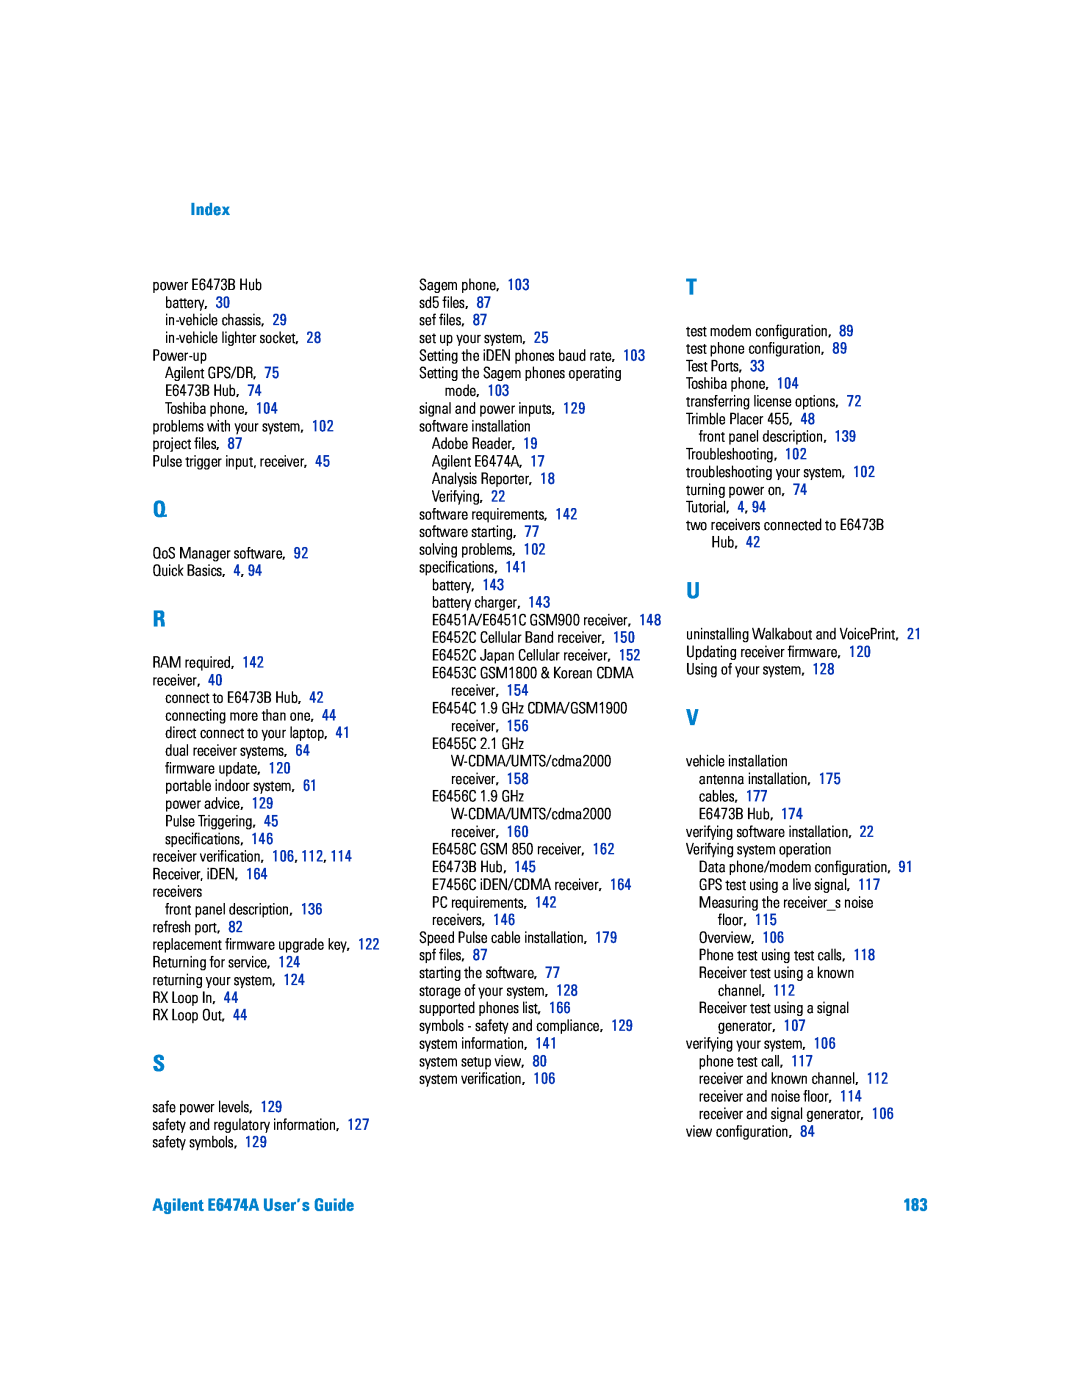 Agilent Technologies manual Index, Agilent E6474A User’s Guide 